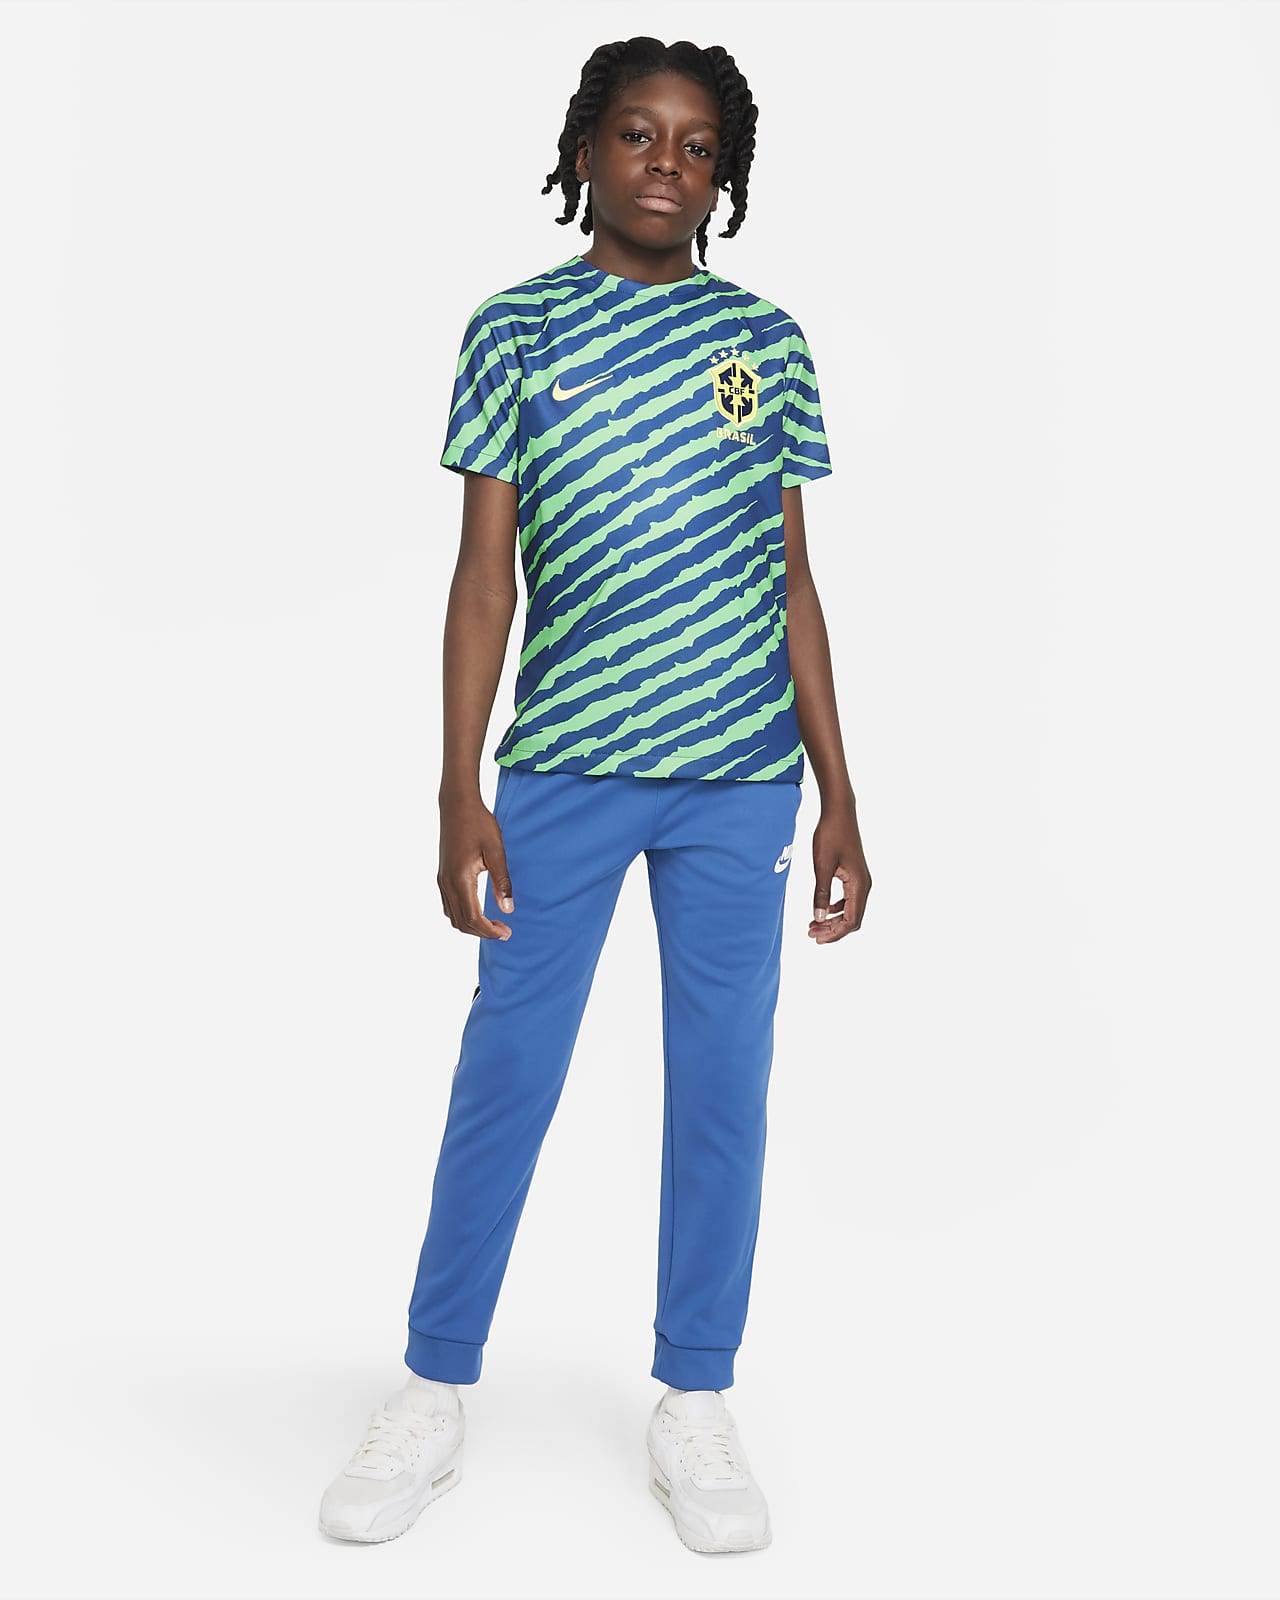 Brazil National Soccer Team Nike Dri Fit Training Jersey Size M